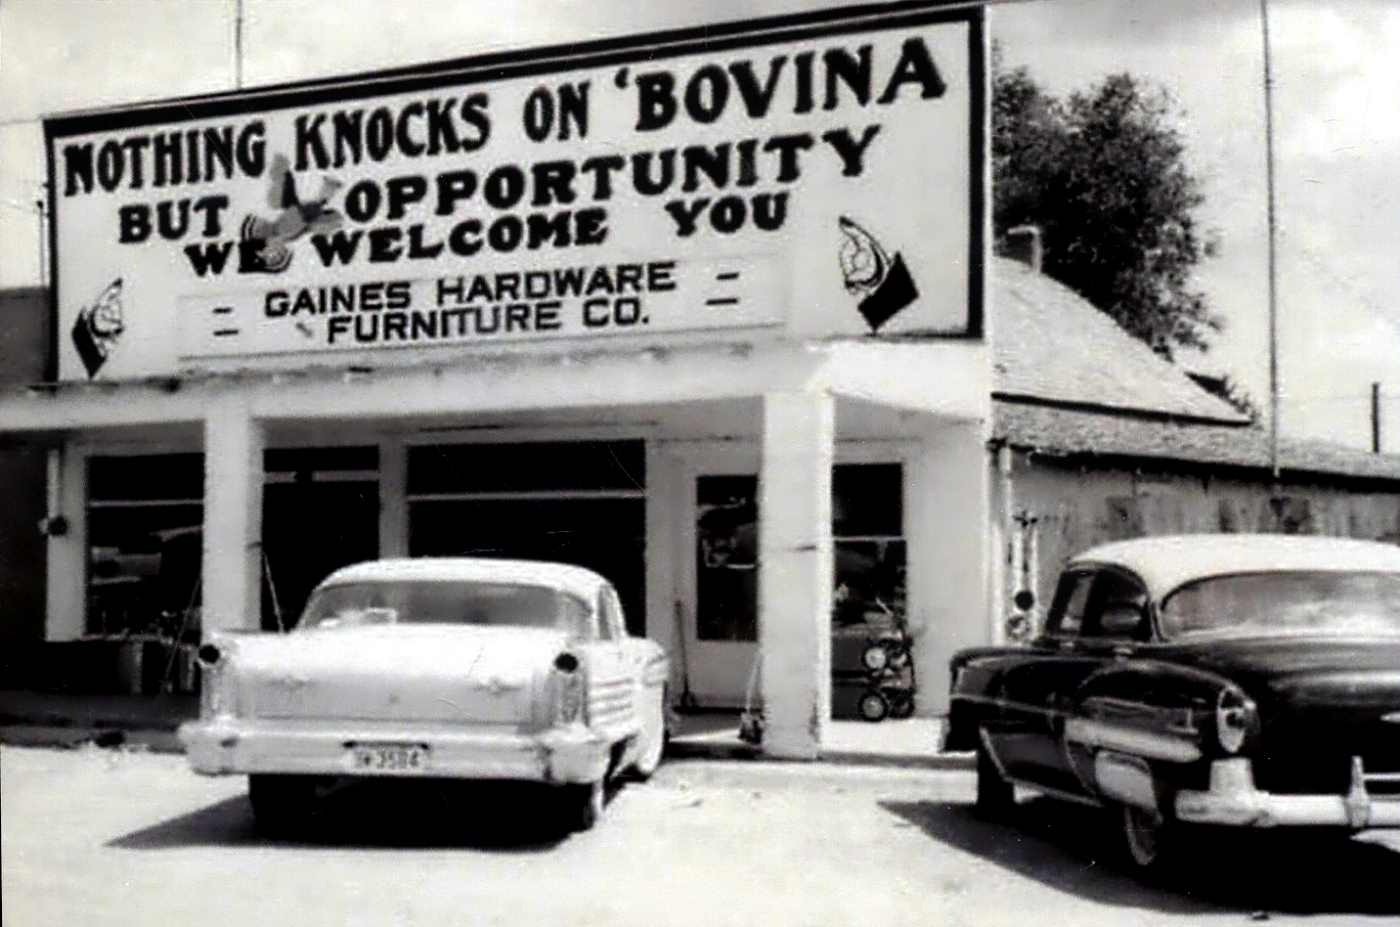 Gaines Hardware & Furniture in Bovina 1950s